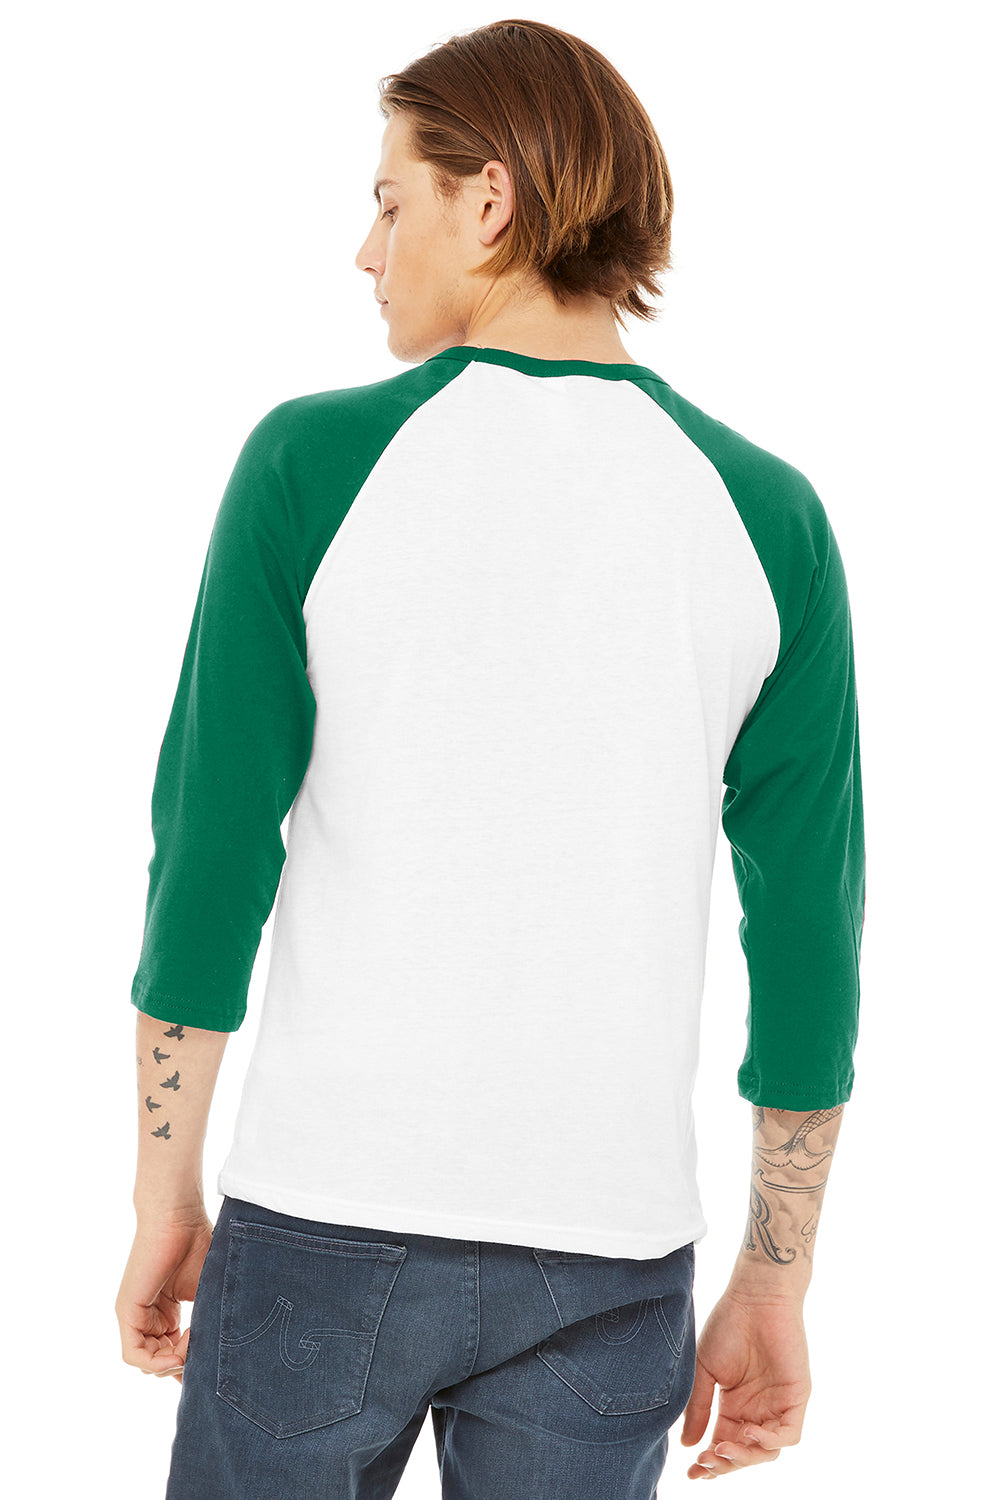 Bella + Canvas BC3200/3200 Mens 3/4 Sleeve Crewneck T-Shirt White/Kelly Green Model Back